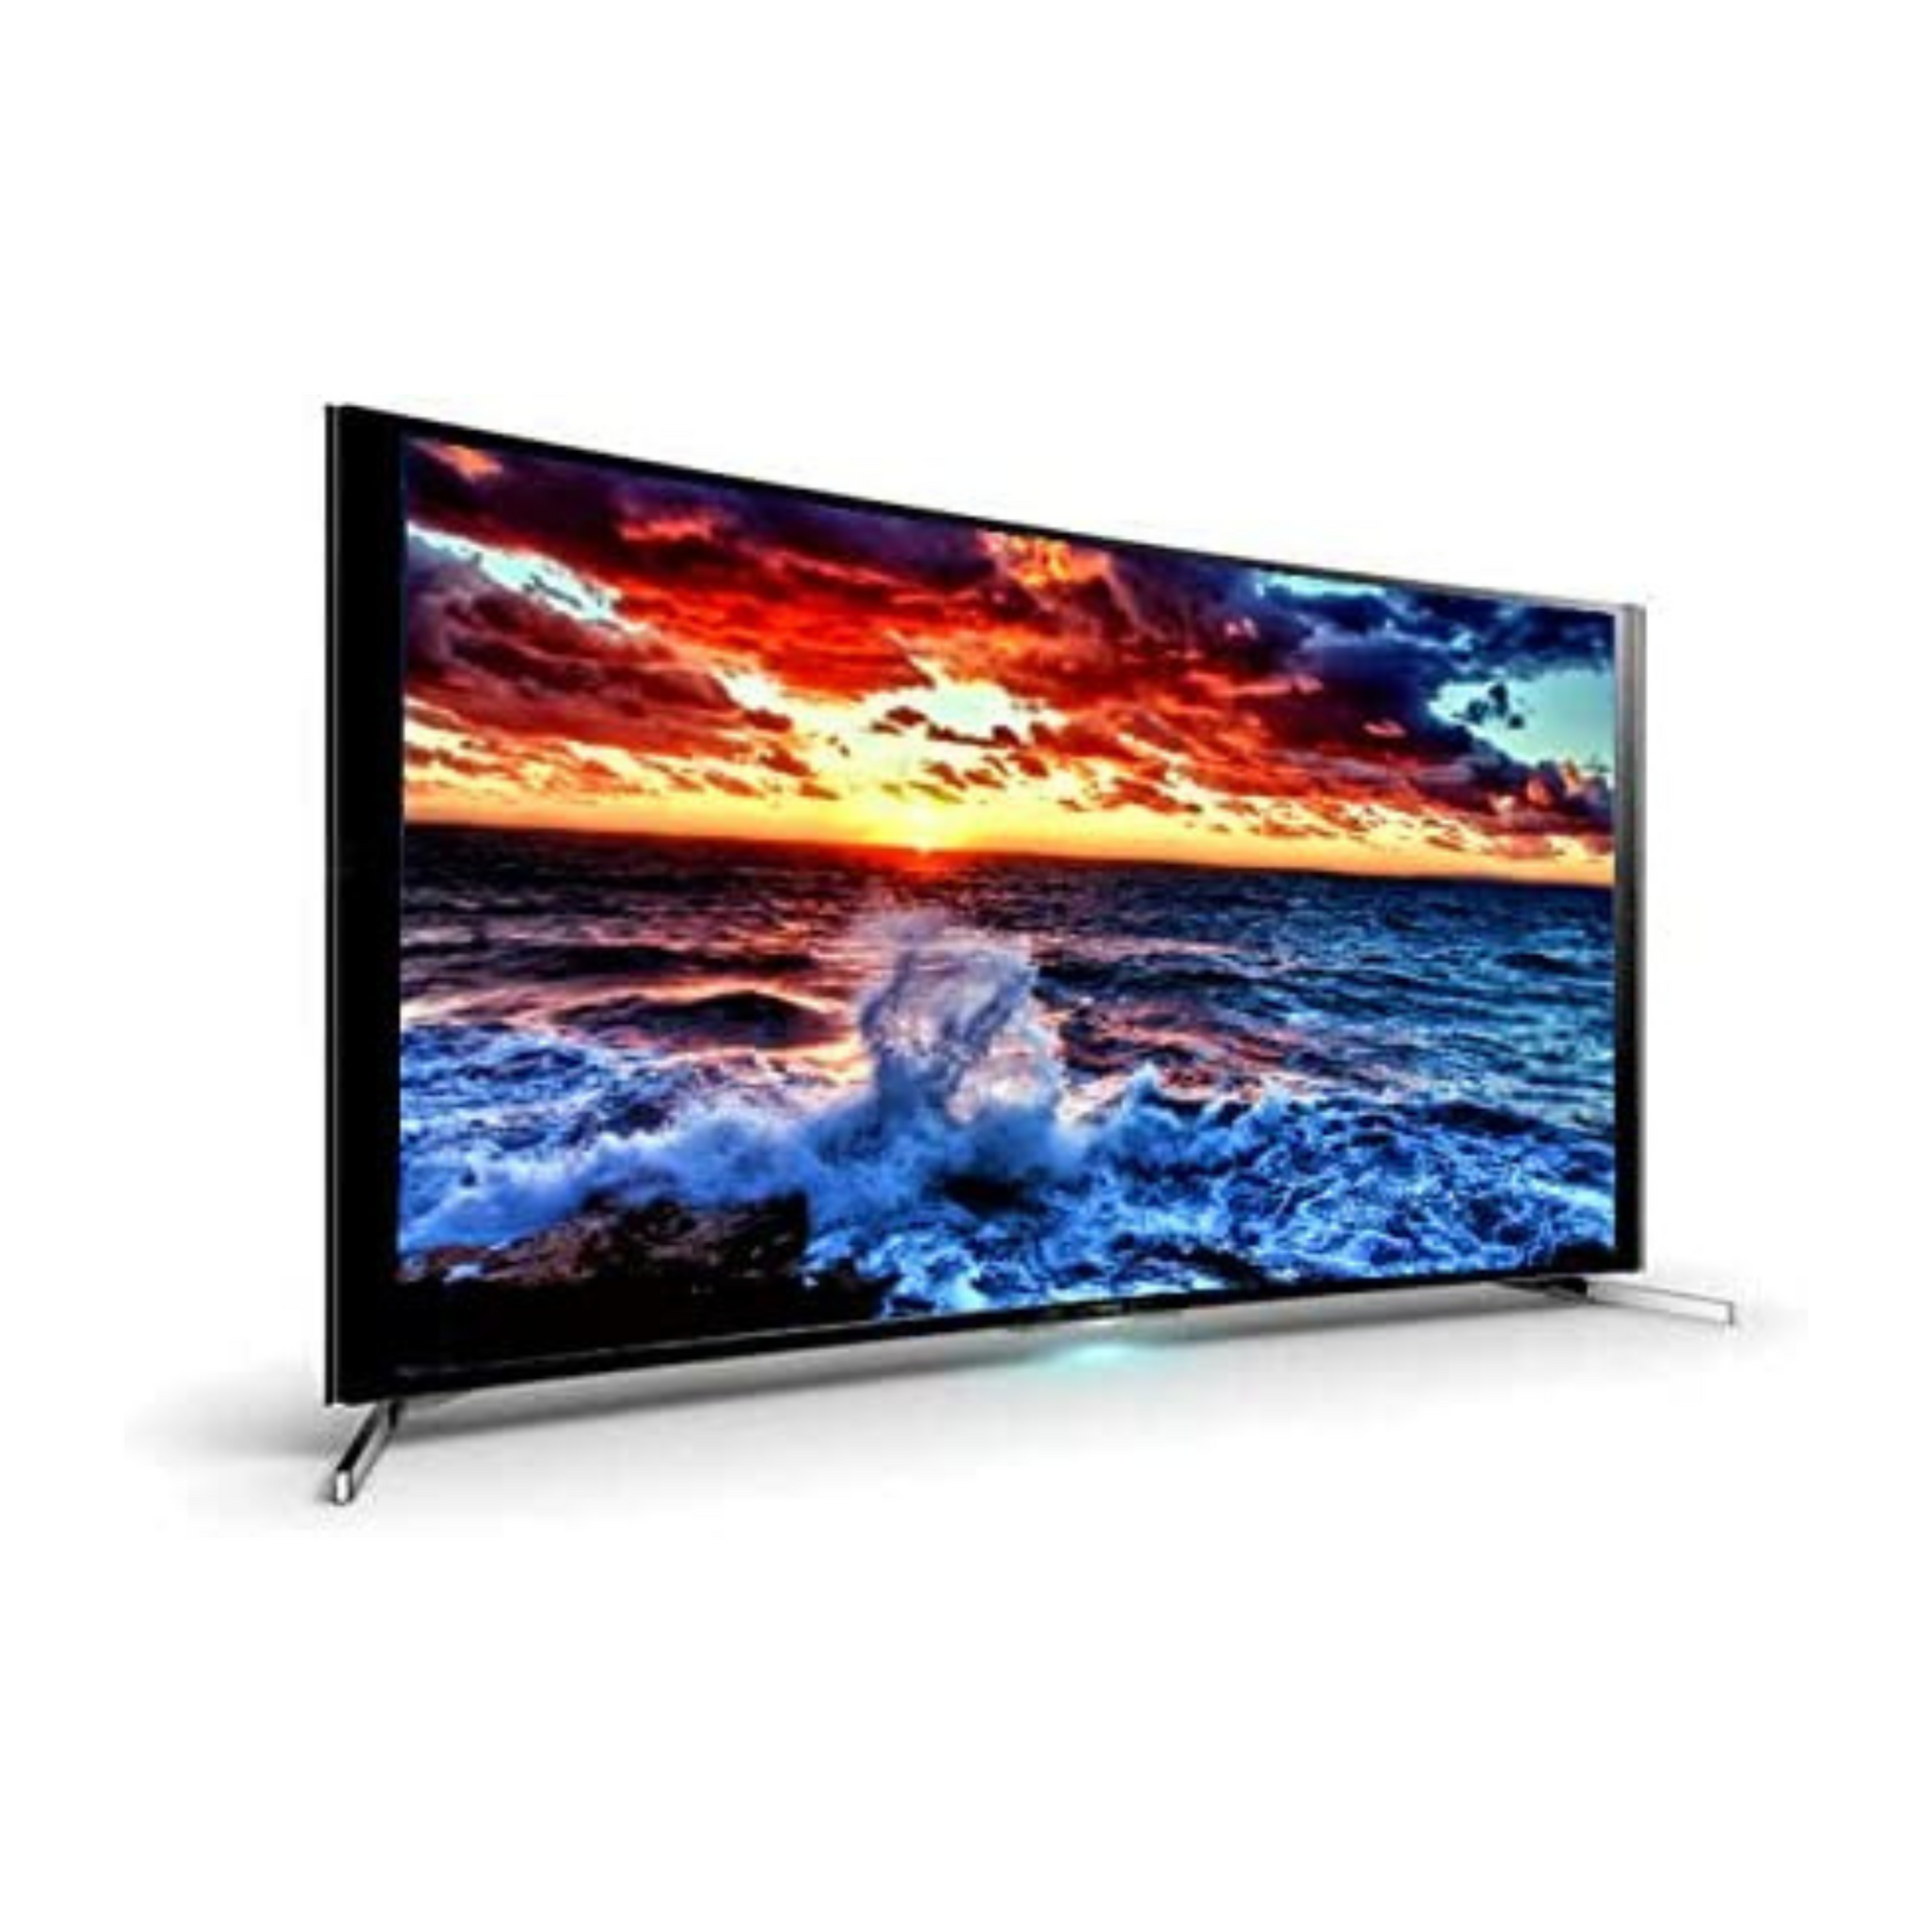 Maser 50 inch Smart TV, 50NS5000